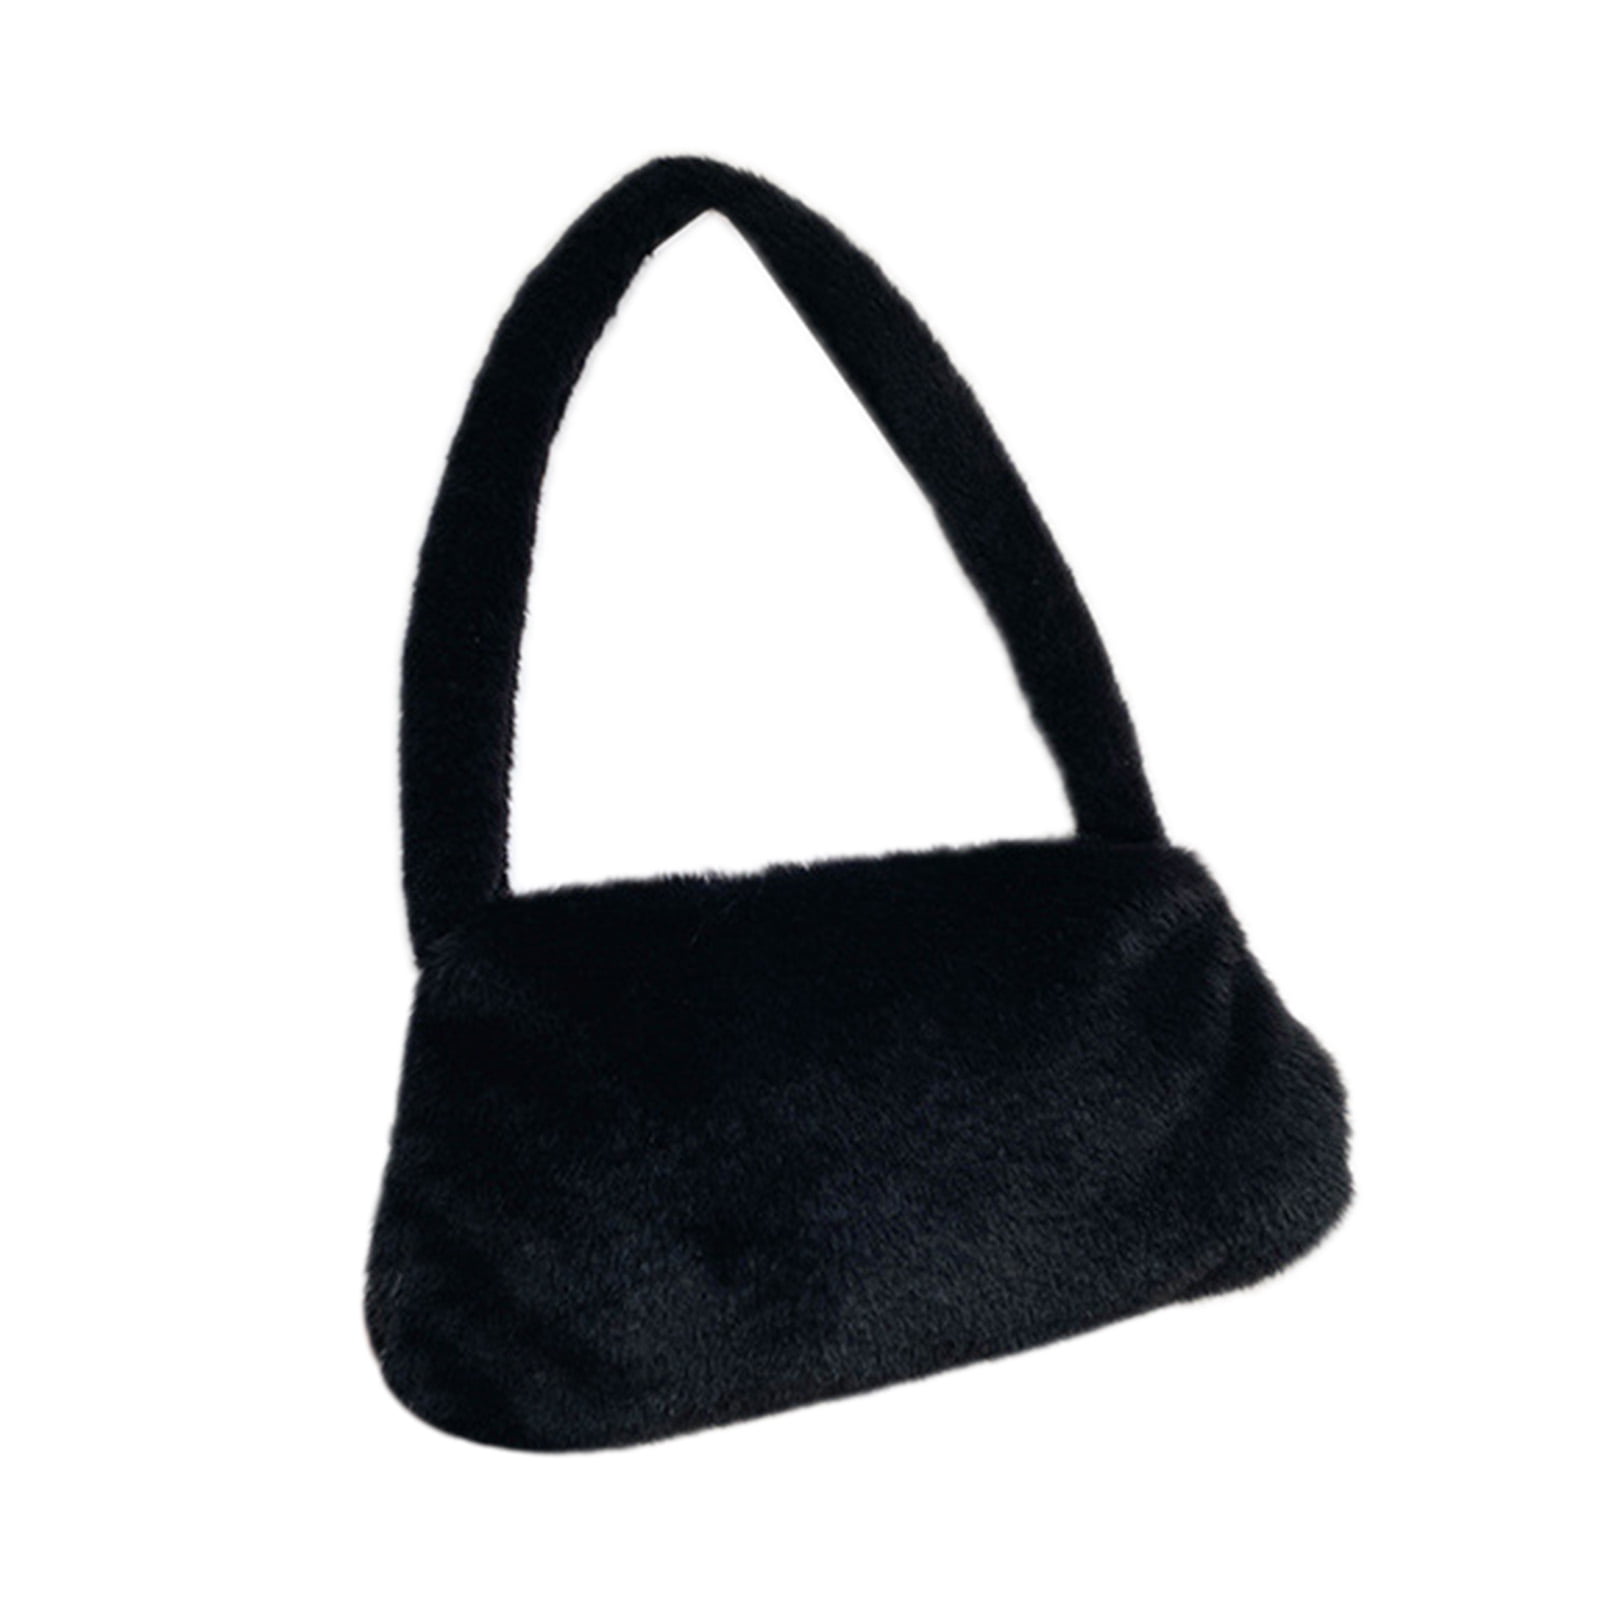 Pwtool Plush Handbag Aesthetic Women Leopard Print Shoulder Bag Fluffy  Clutch Faux Fur Handbag Tote Bag